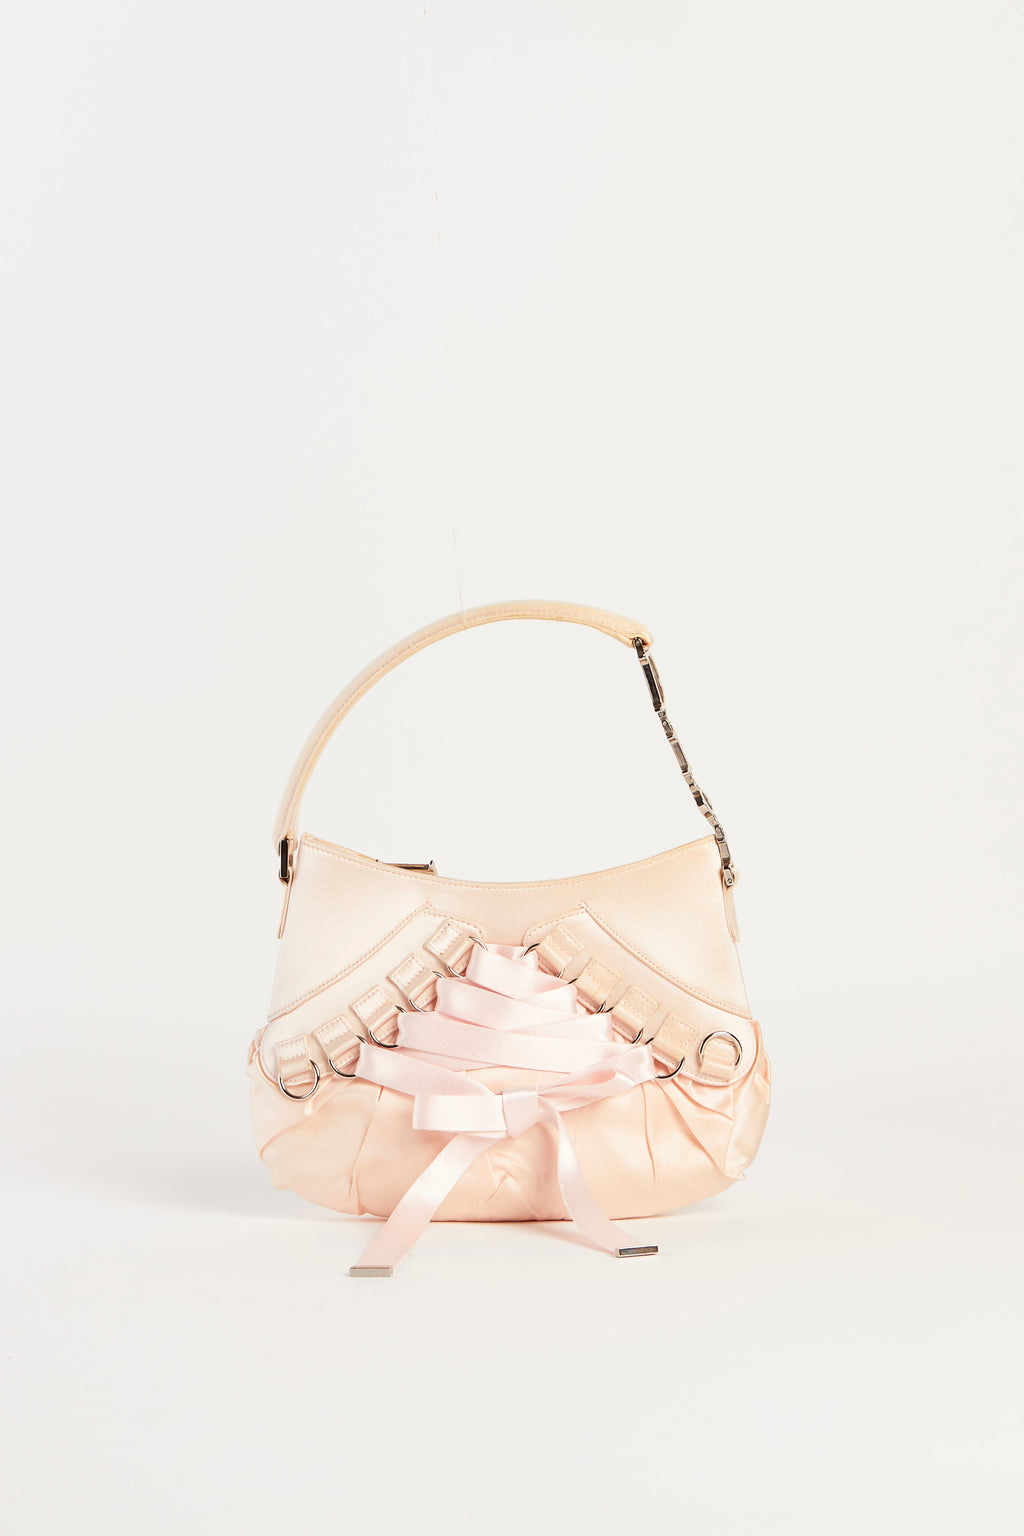 SUPER RARE Christian Dior Galliano Mini Pink Satin Ballerina Shoulder Bag